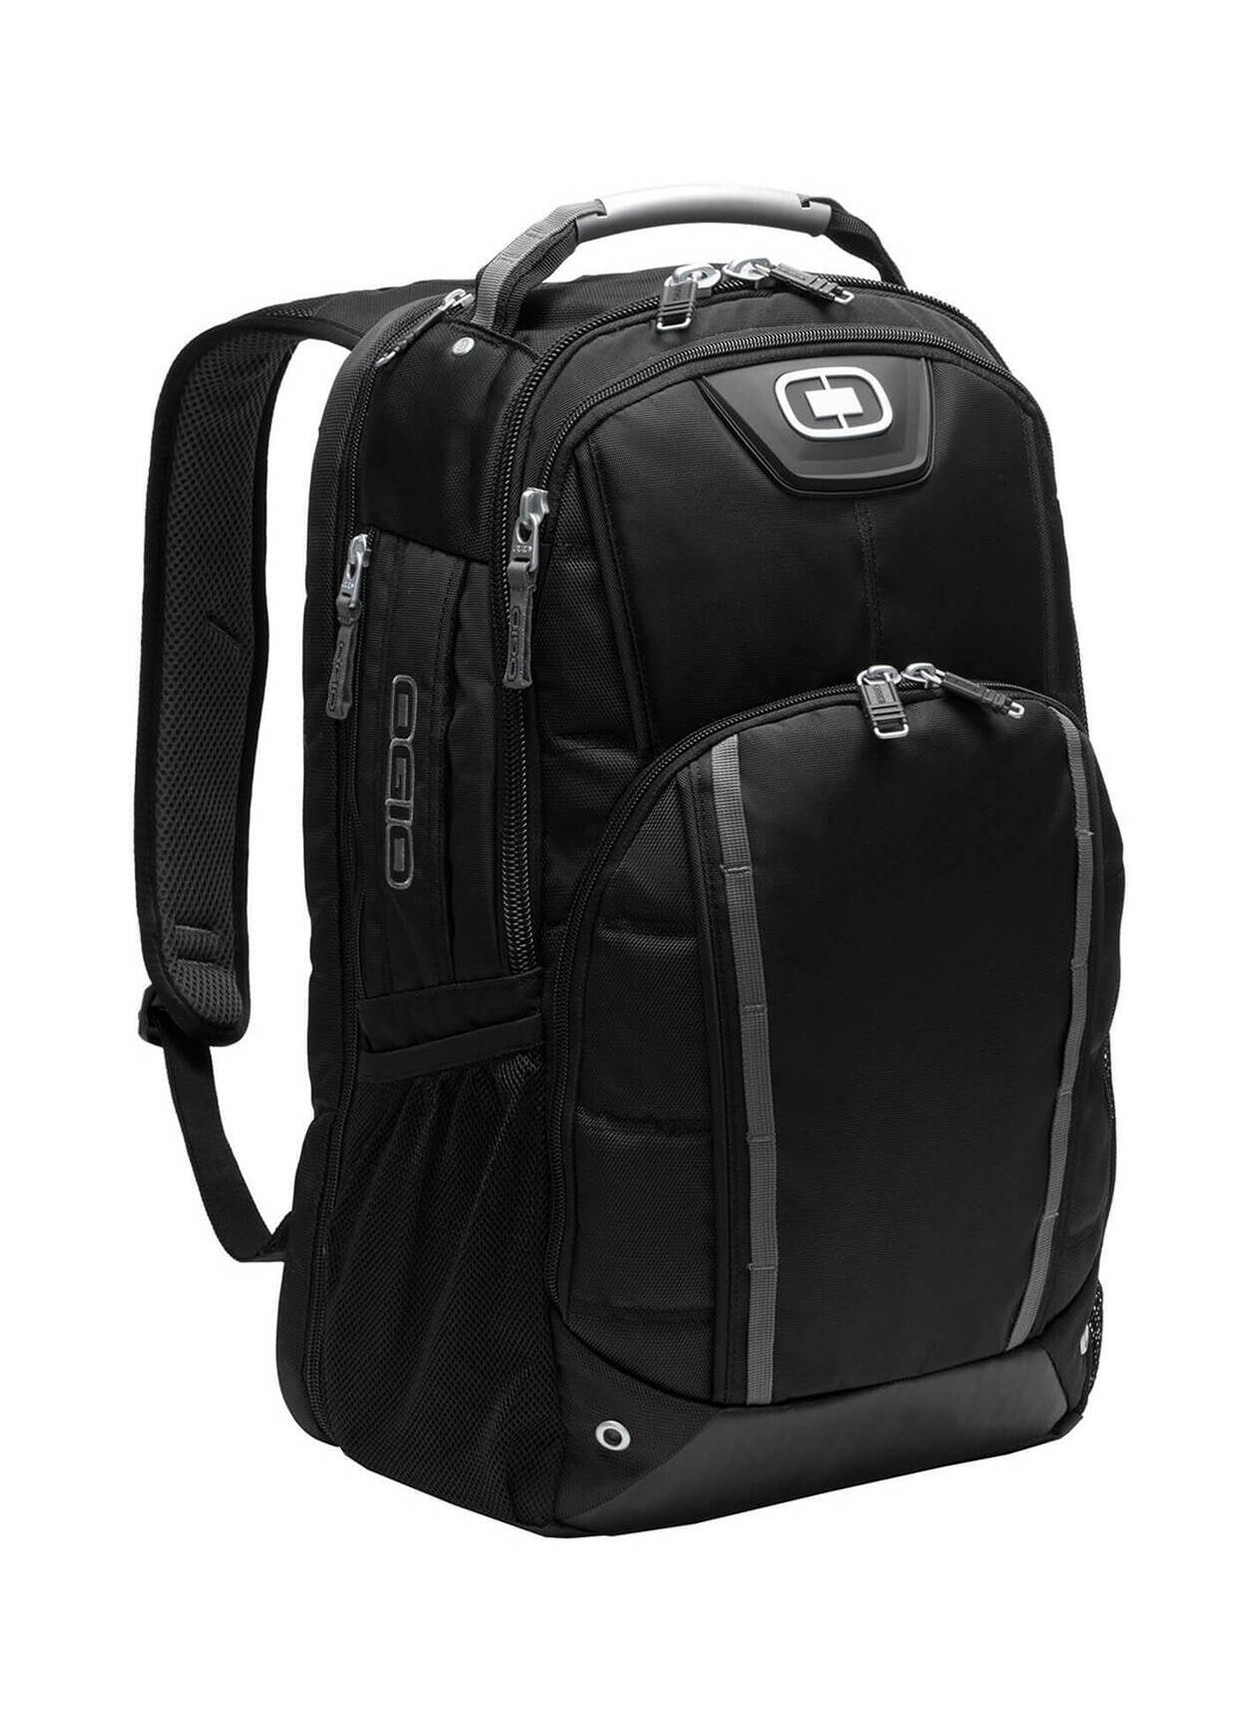 OGIO Black Bolt Backpack | Company Bags